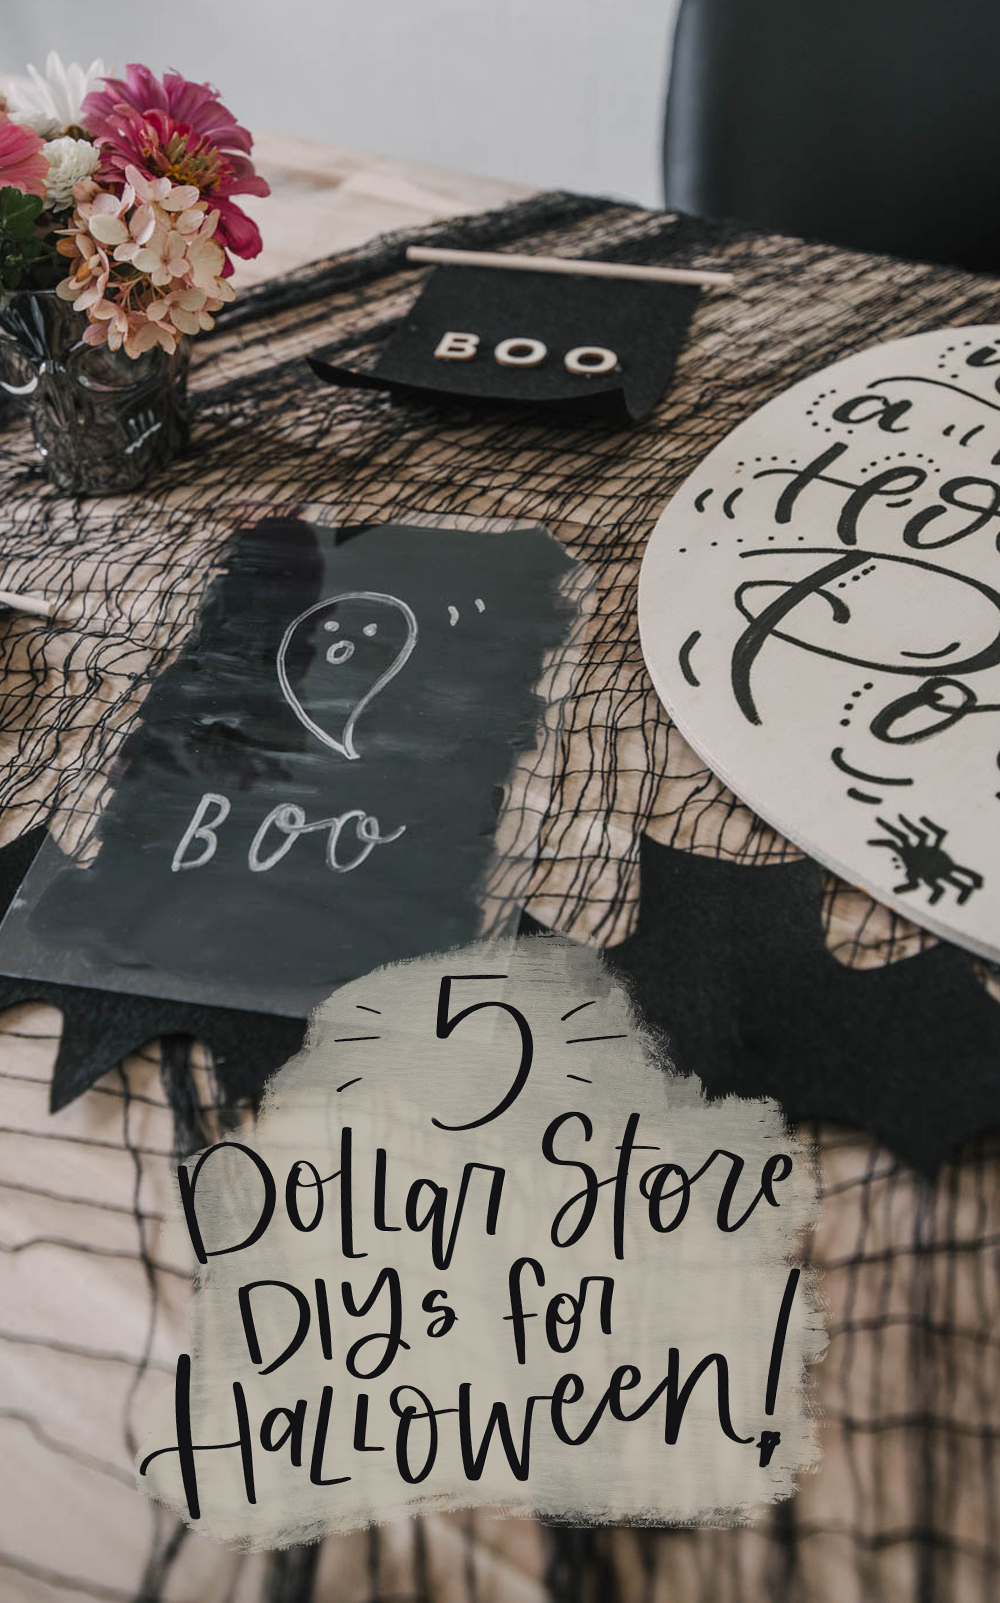 Dollar store DIYs for Halloween!